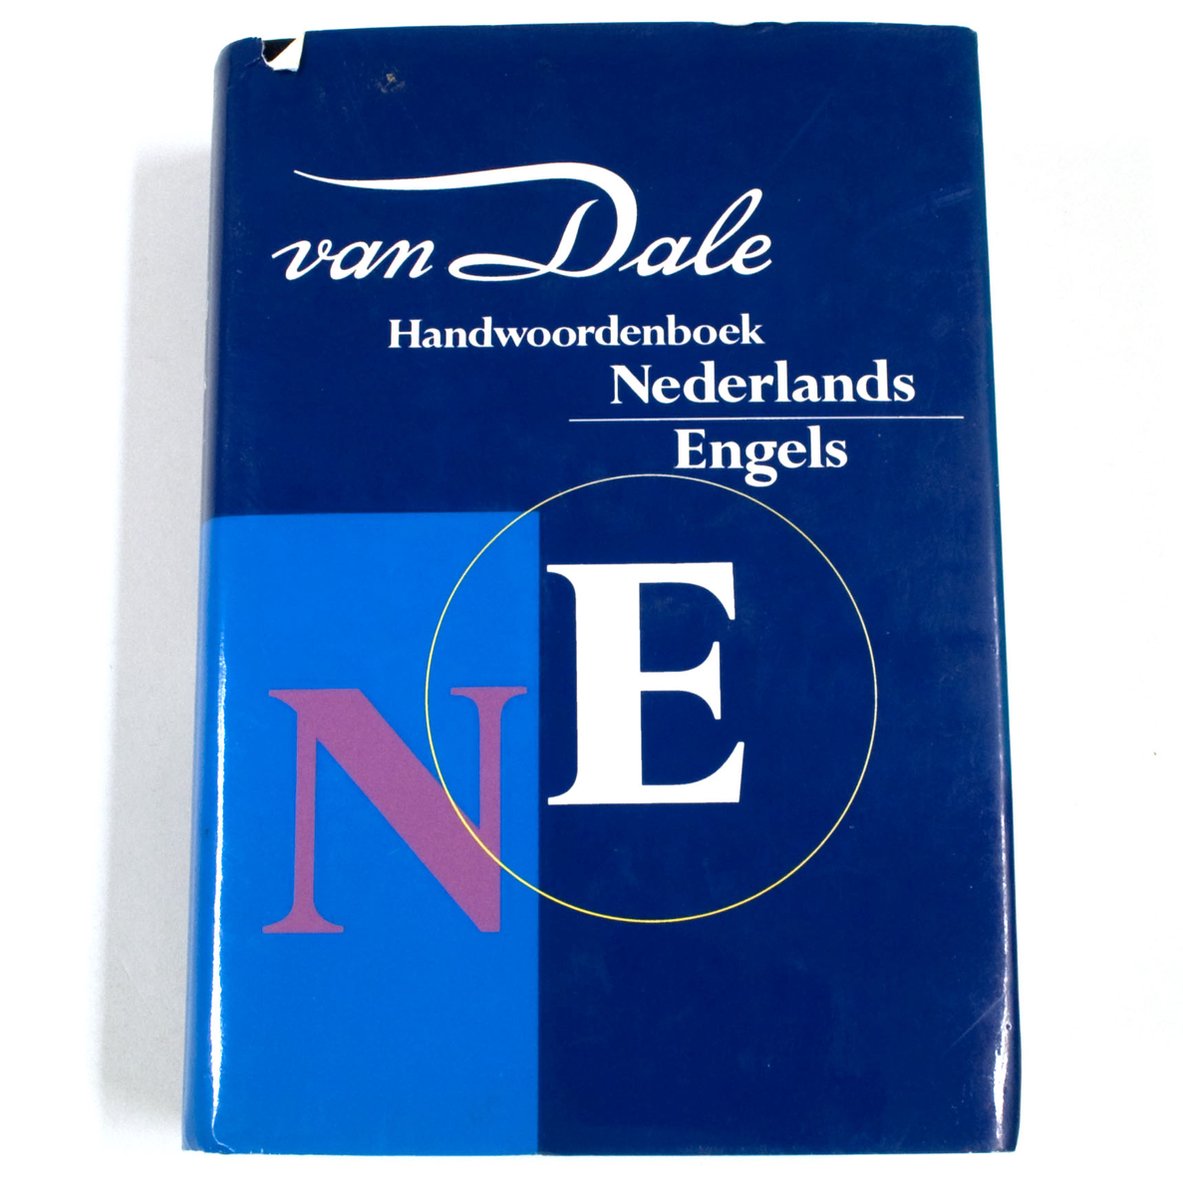 Van Dale handwoordenboek Nederlands-Engels / Van Dale handwoordenboeken voor hedendaags taalgebruik